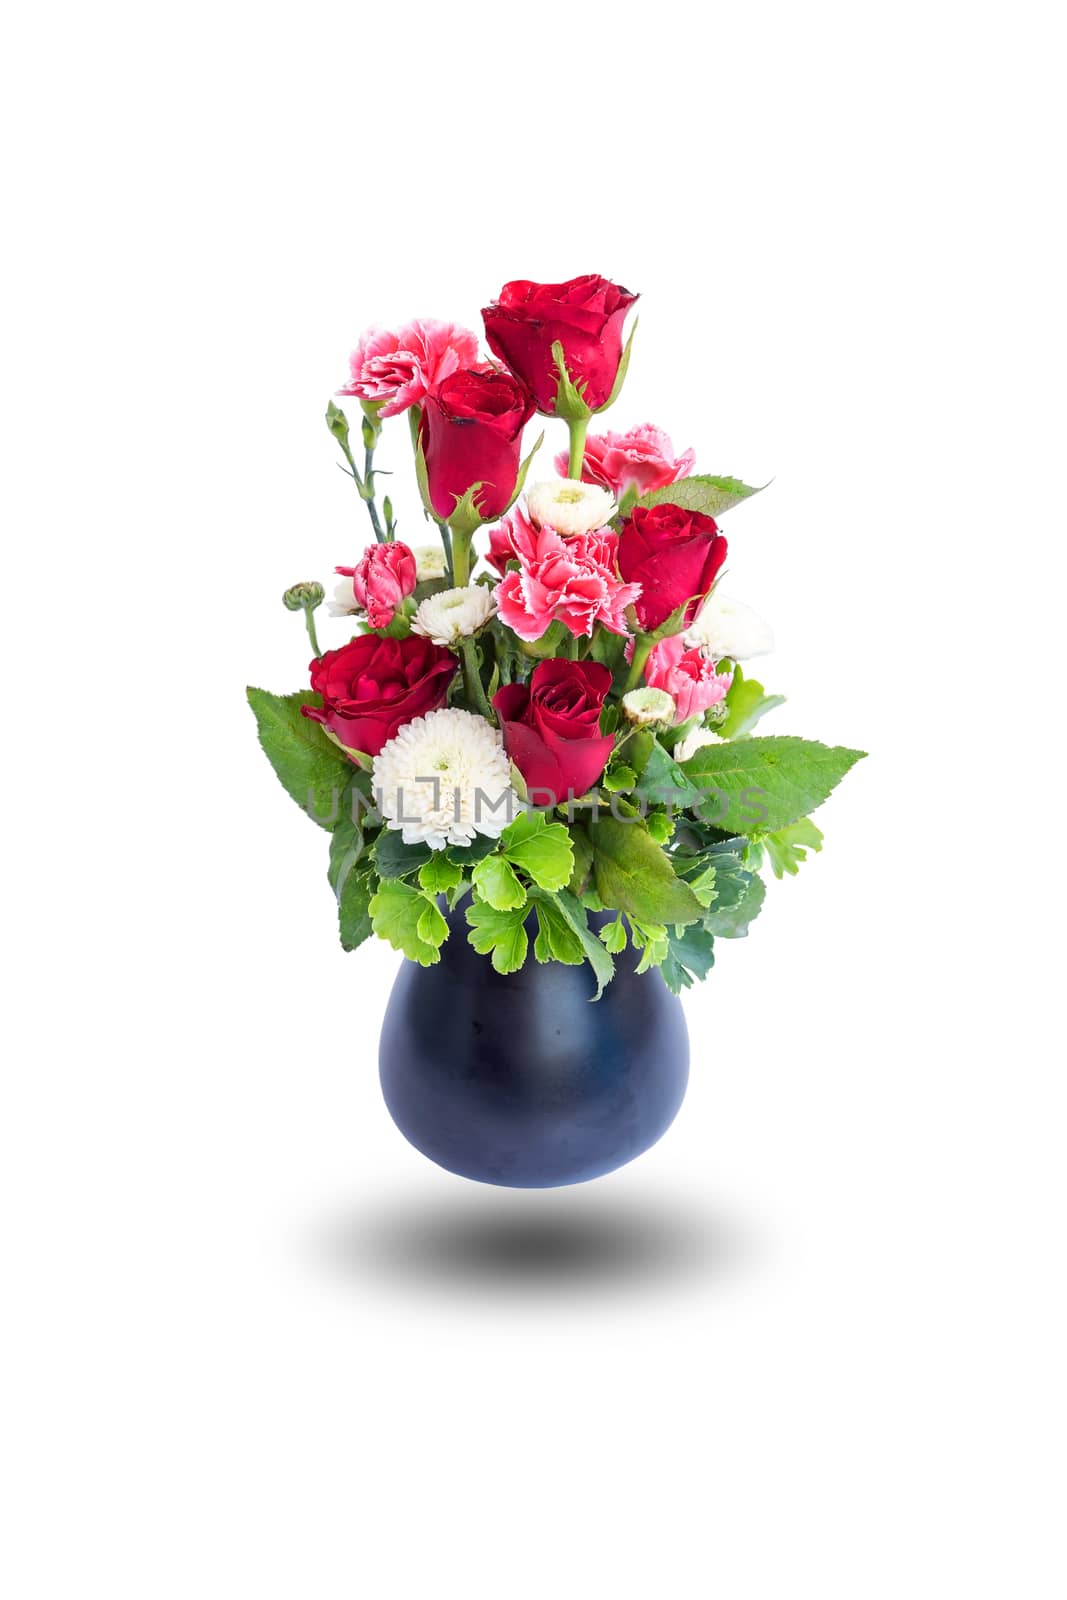 Roses in ceramic vase isolated on white background.